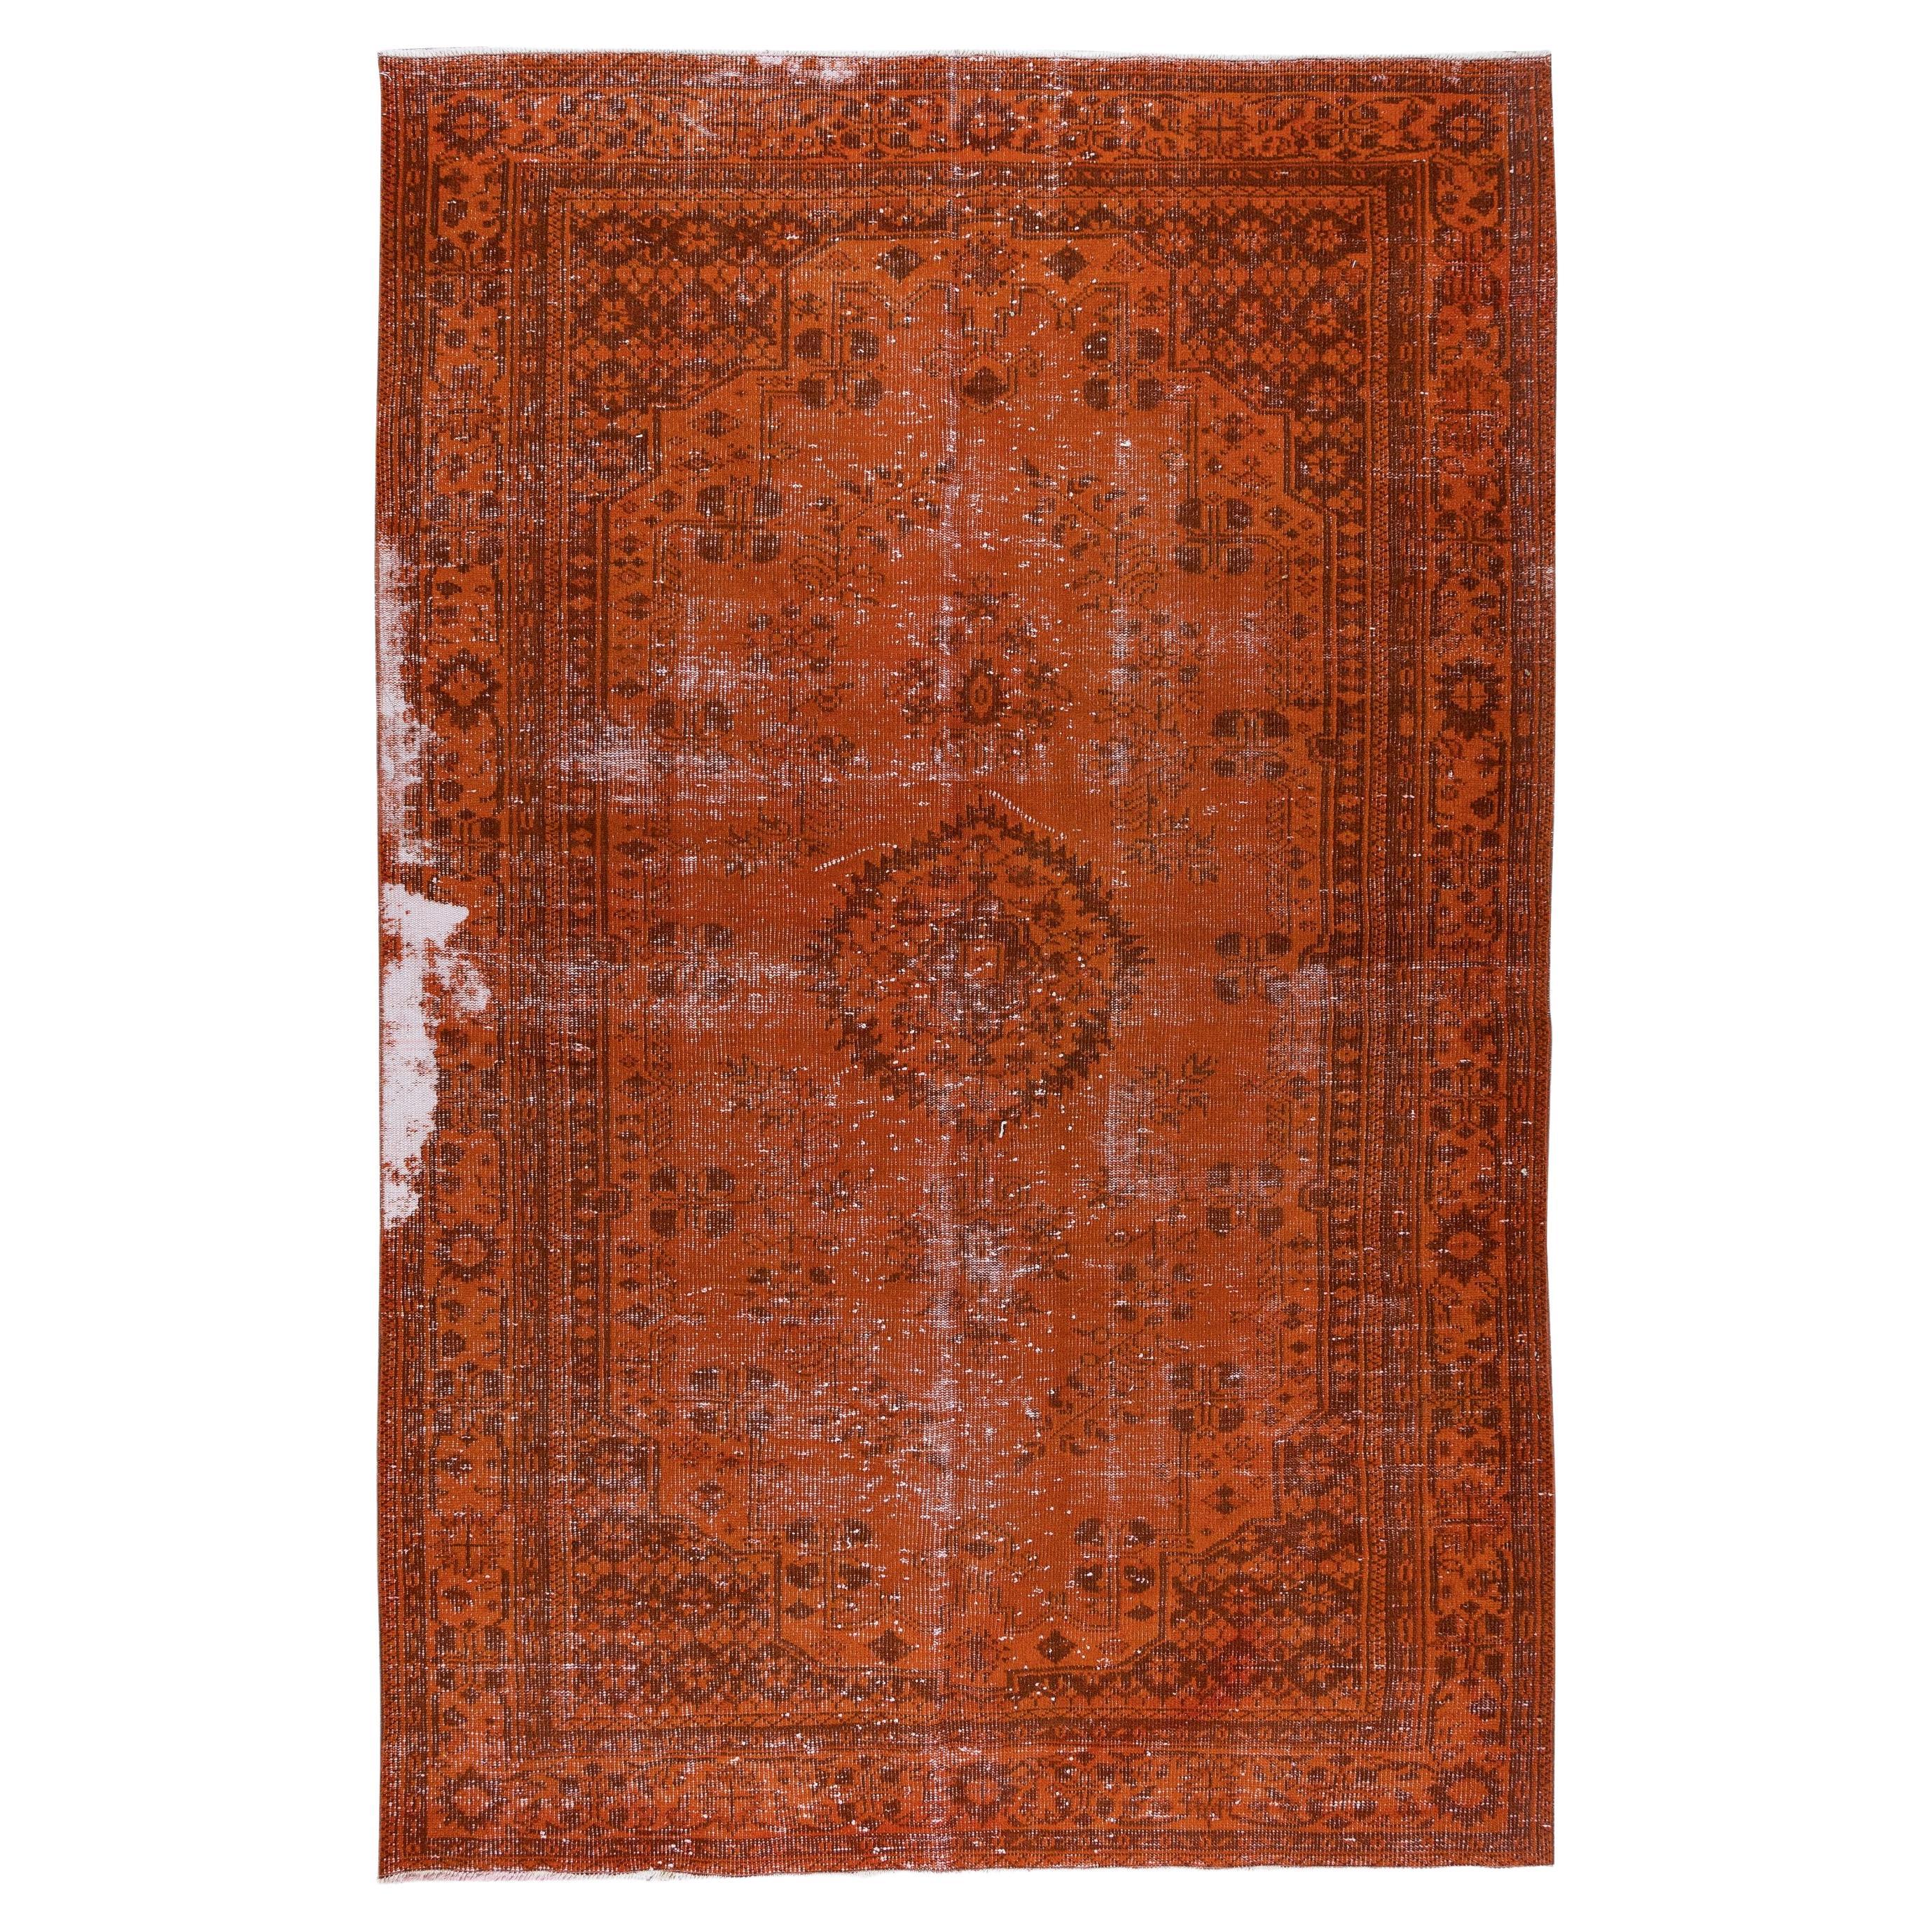 6.2x9.8 Ft Orange Vintage Handmade Turkish Wool Rug, Distressed Modern Carpet For Sale